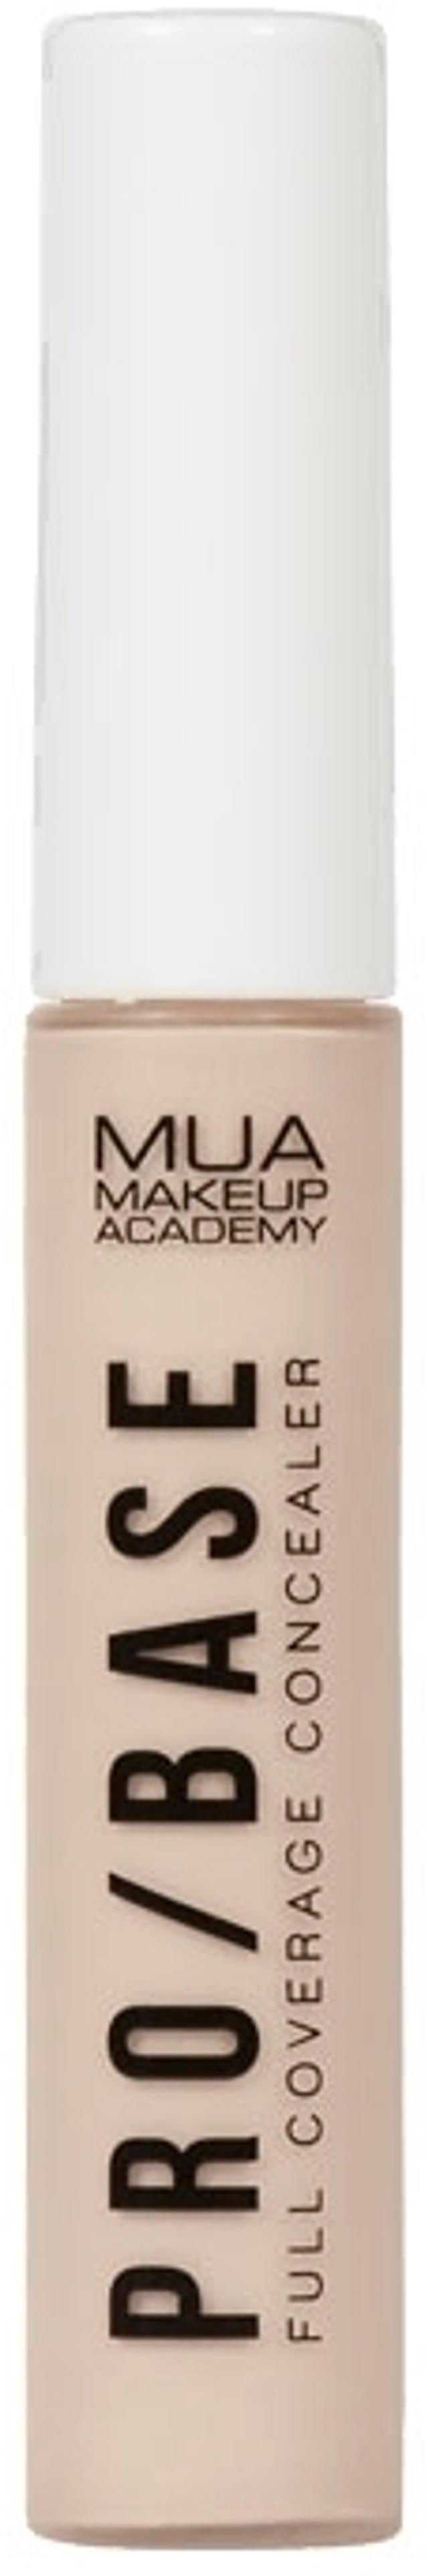 MUA Make Up Academy Pro Base Full Cover Concealer 7,8 g 102 peitevoide